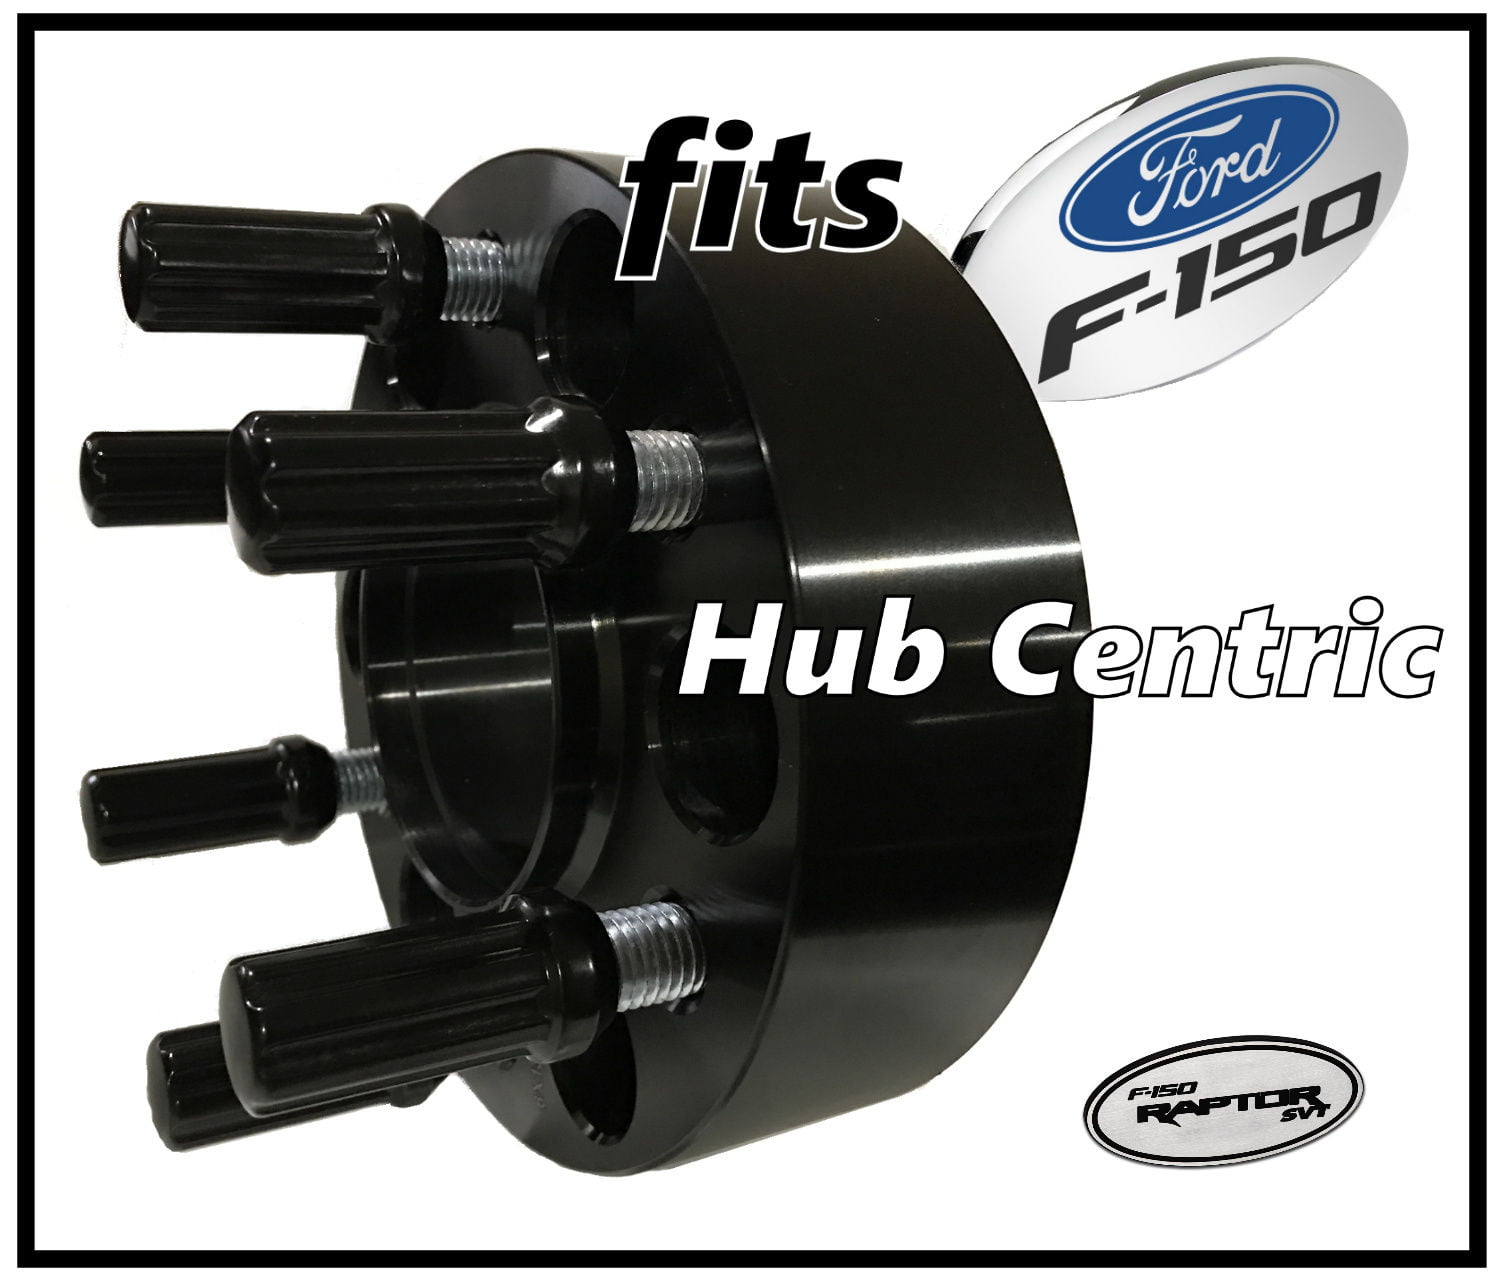 Complete Ford F-150 Black 2" Hub Centric Wheel Spacers 6x135 24 Spline Lug Nuts